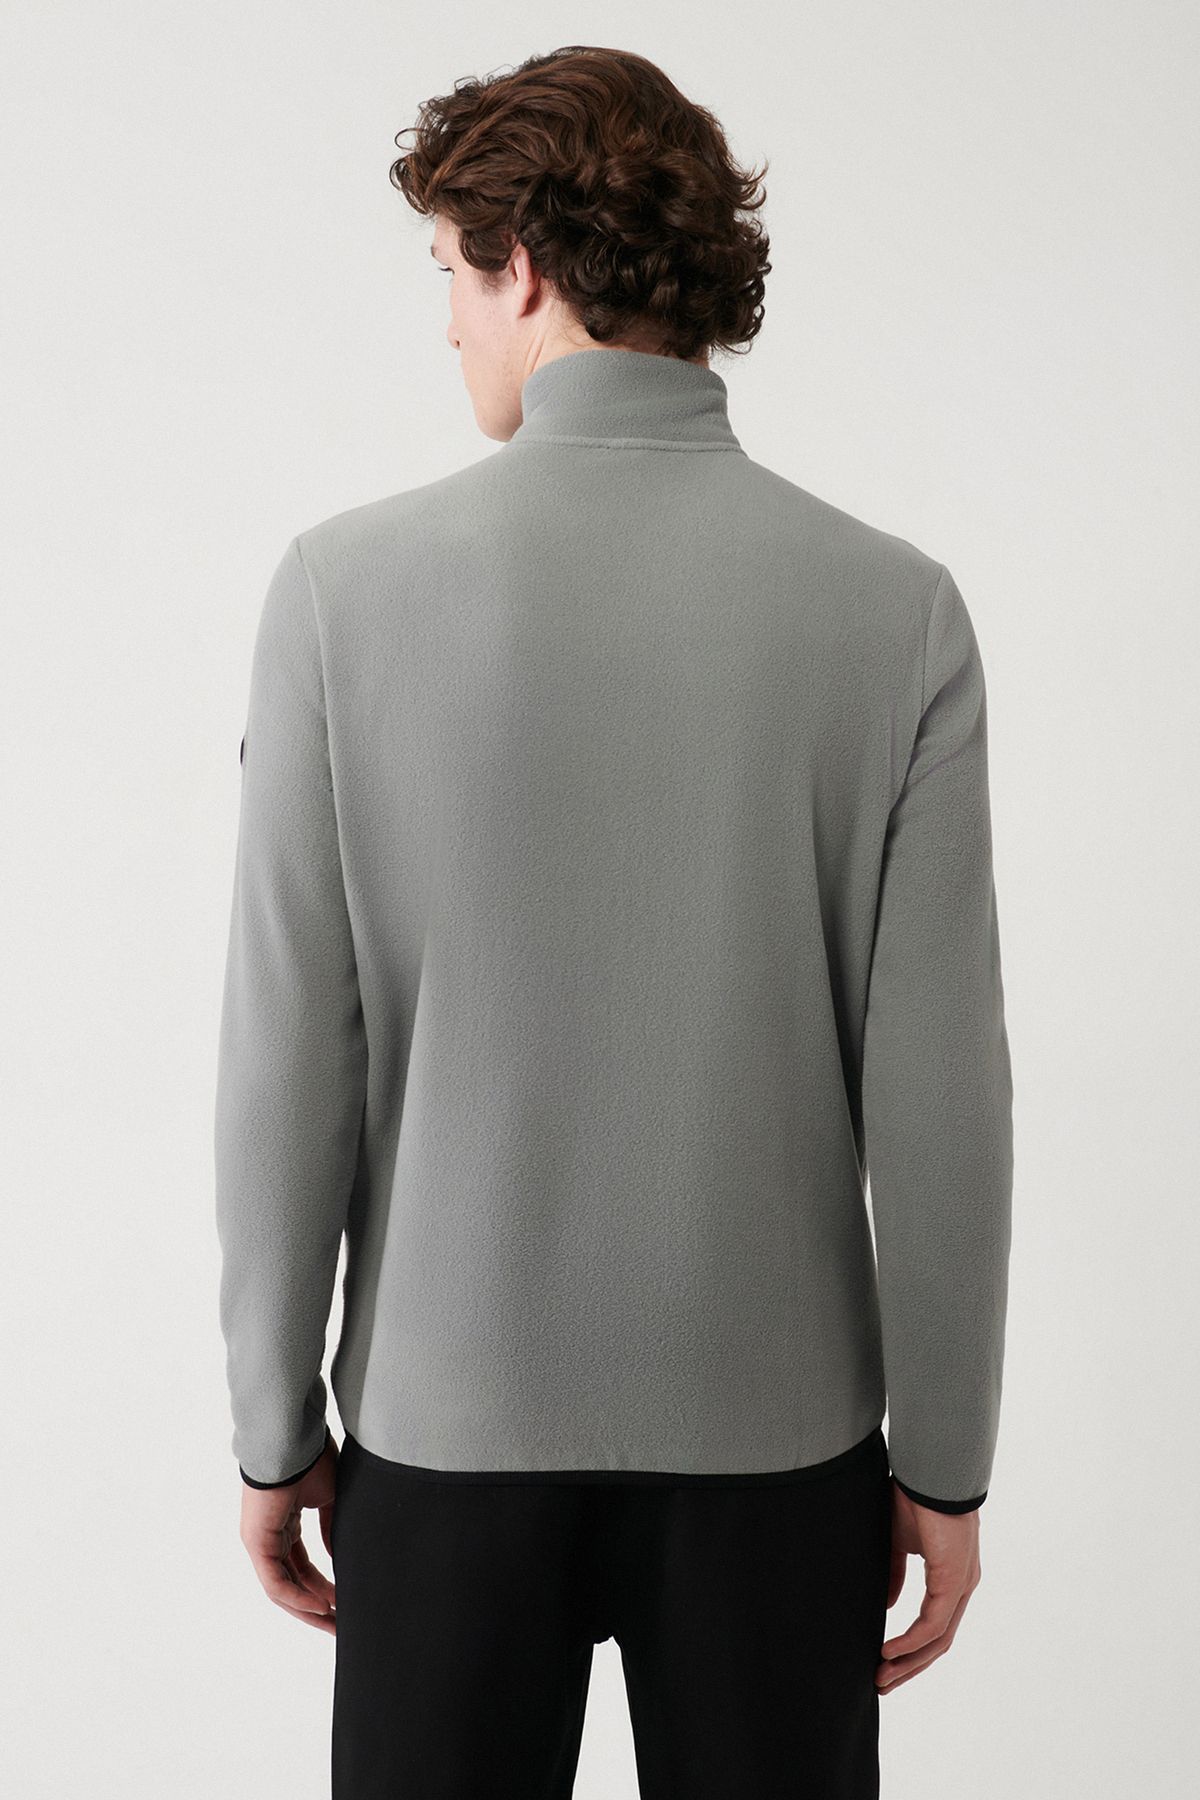 Avva یقه ایستاده خاکستری مردانه نیم زیپ مقاوم در برابر سرما با تناسب معمولی سویشرت استاندارد برش پشمی E001